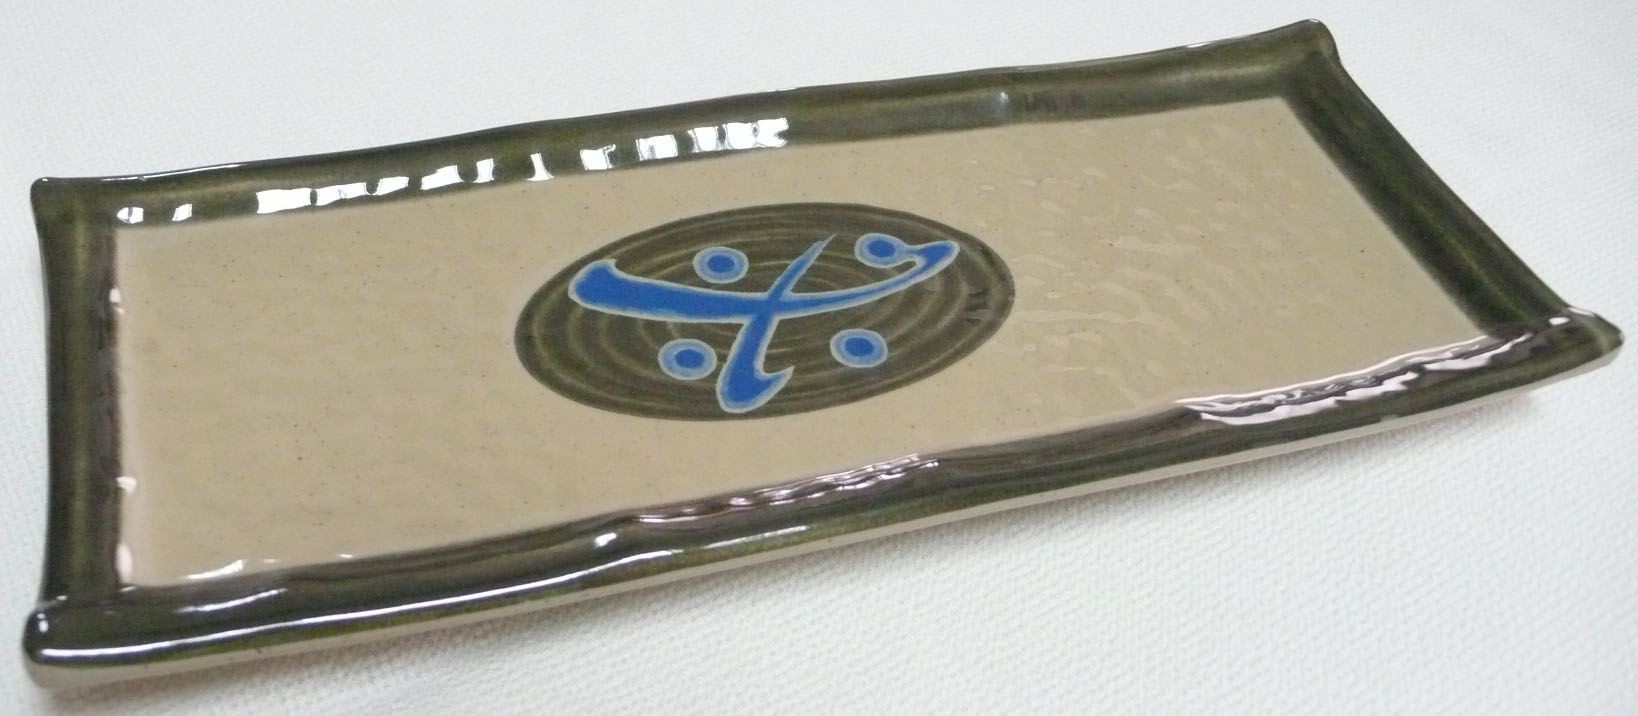 Yanco JP-1504 Japanese 10 1/4" x 5 1/4" Rectangular Plate